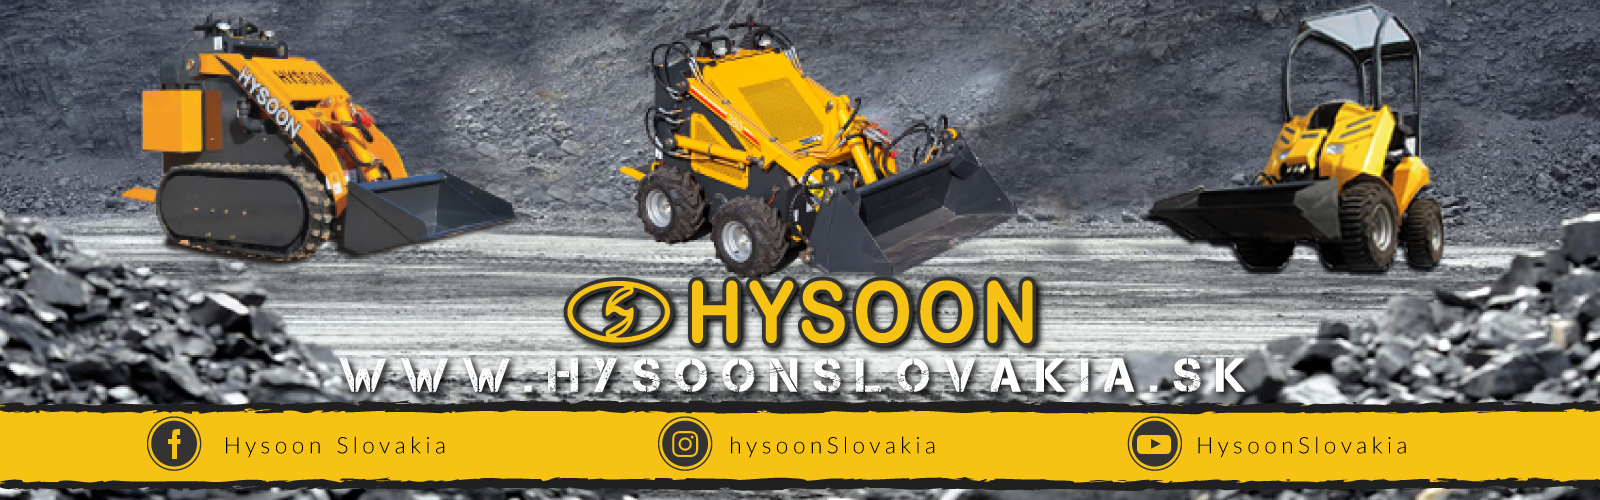 Hysoon